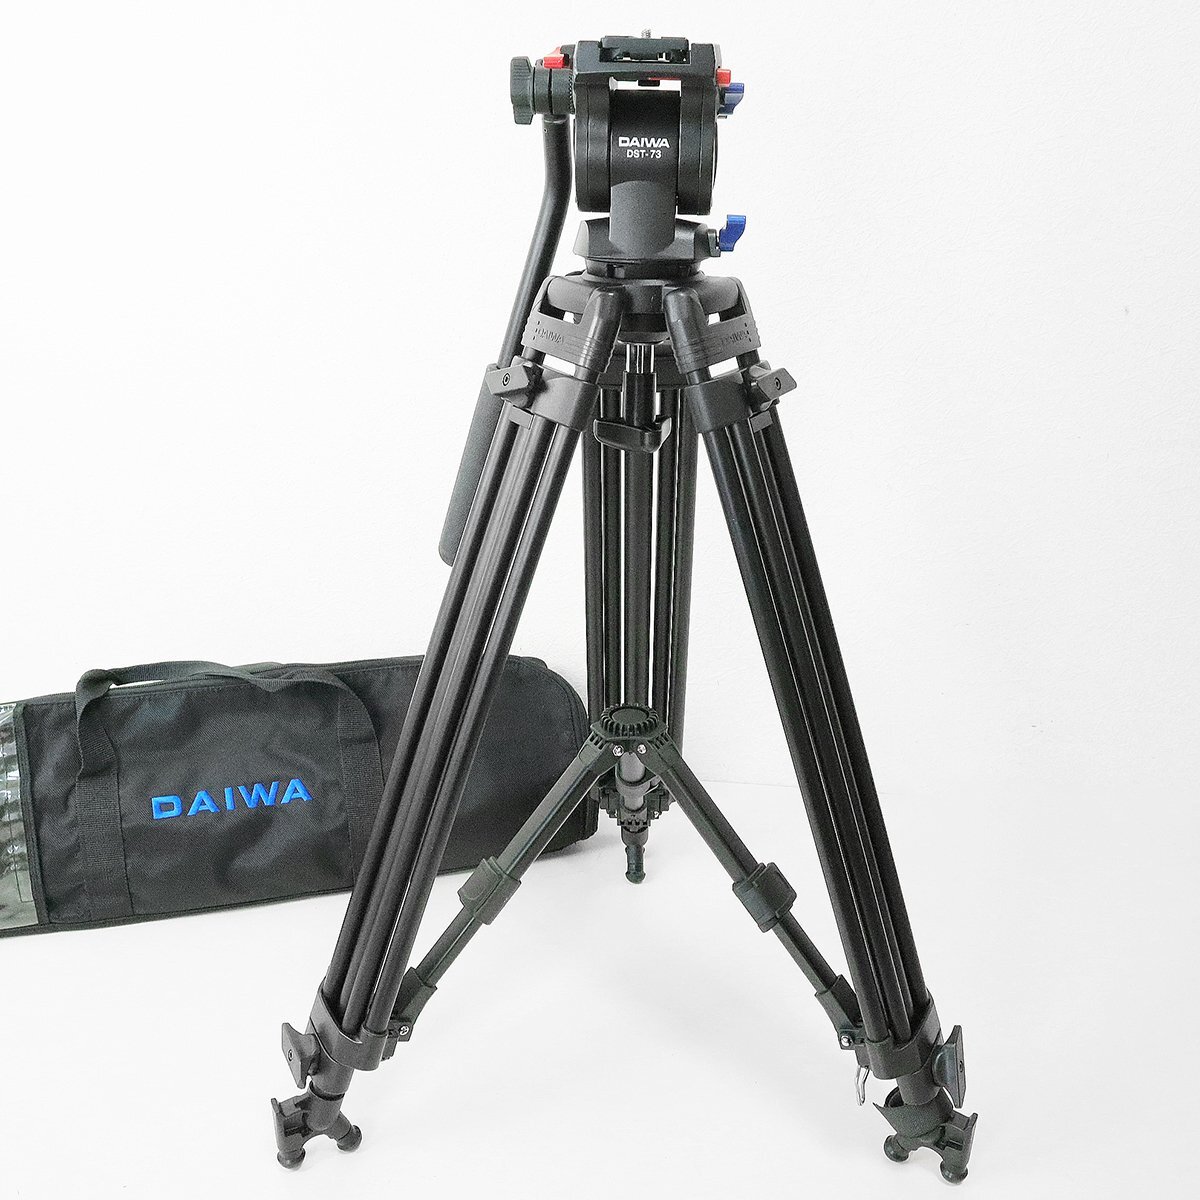 DAIWA Daiwa * tripod DST-73 video camera for ( maximum approximately 158cm 3 step proper load 4kg ) business use professional storage case attaching *4/KK